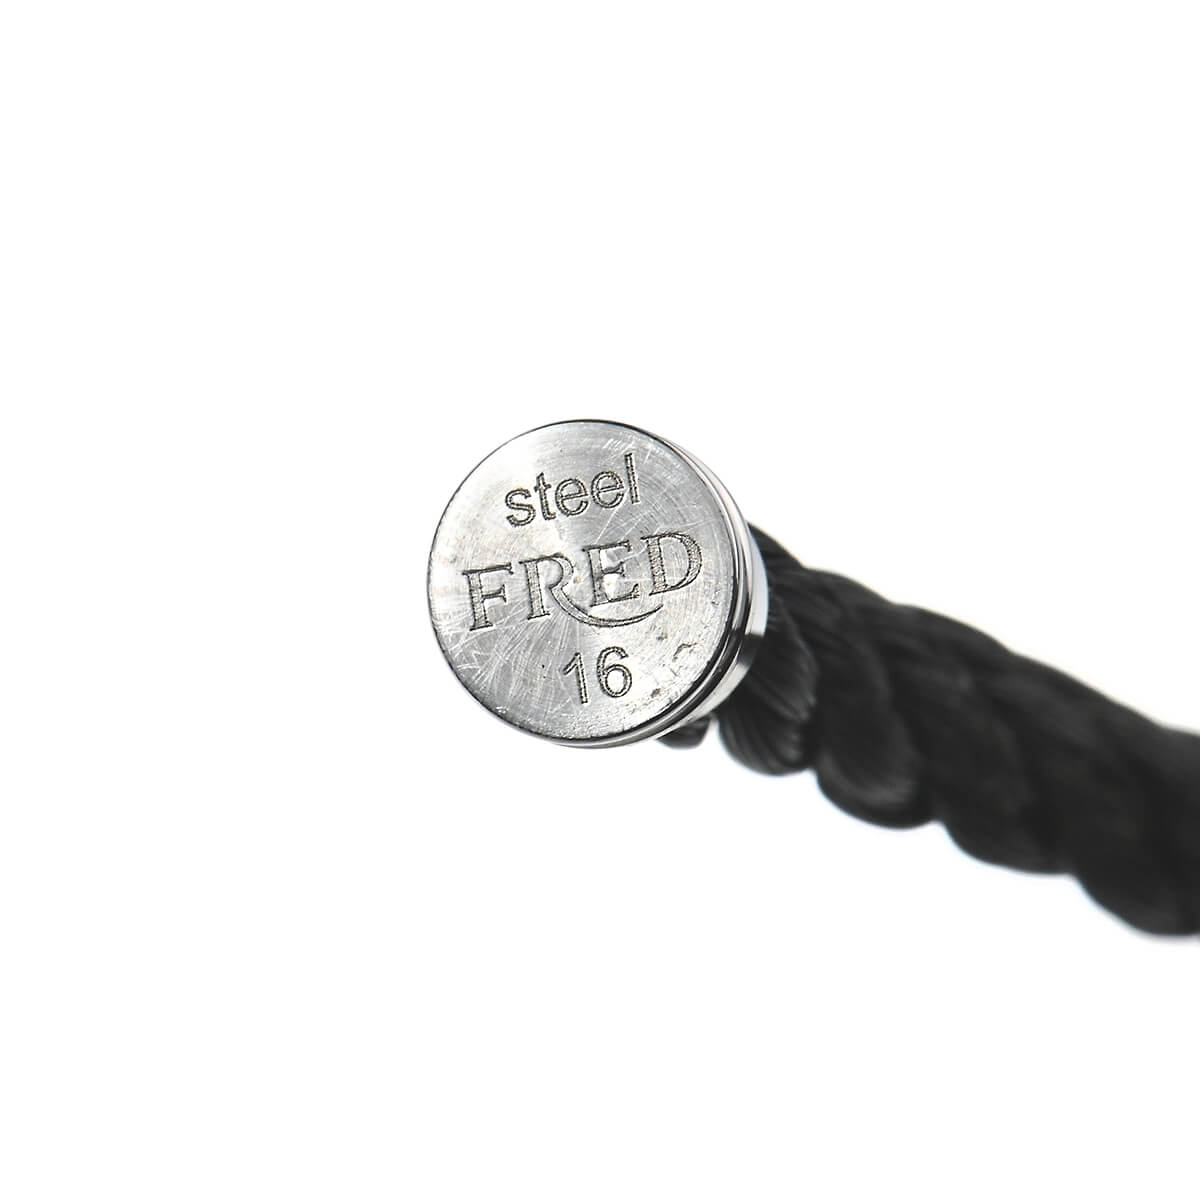 FRED銀座店購入フレッド ケーブル152連LM ブラックforce10